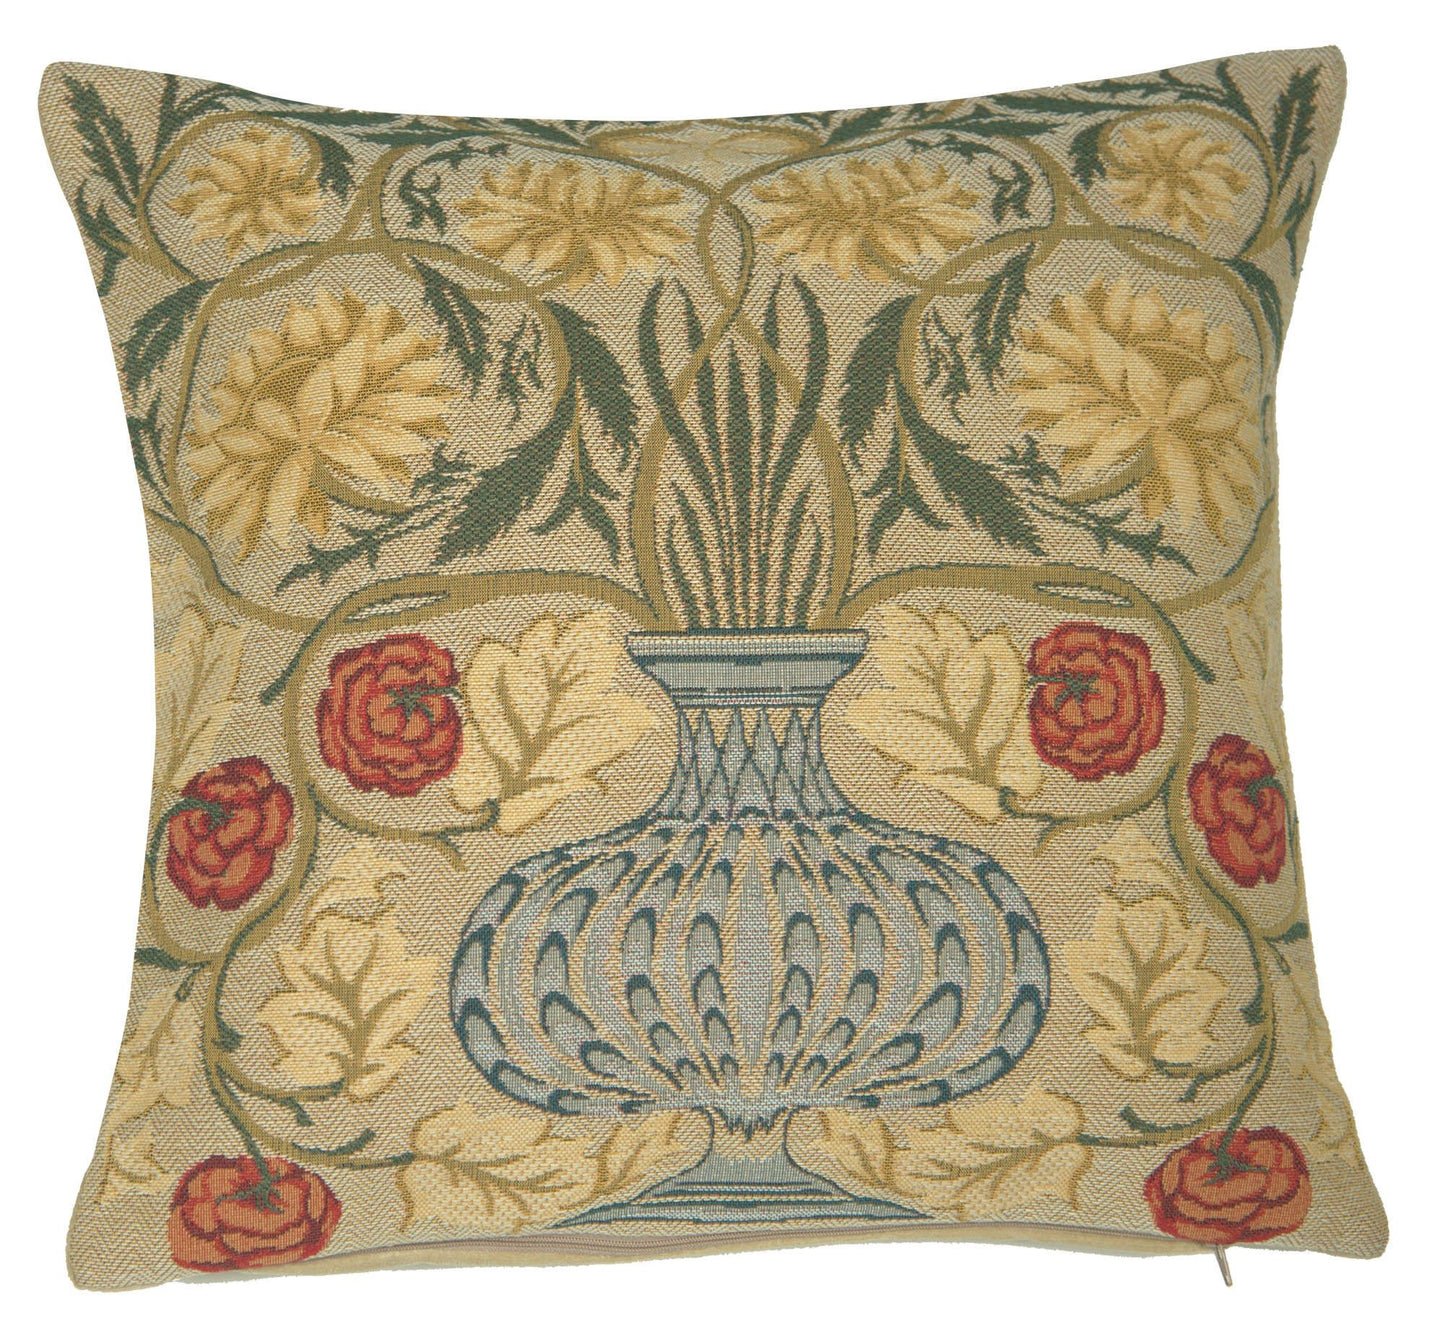 The Rose William Morris European Cushion Covers - RoseStraya.com